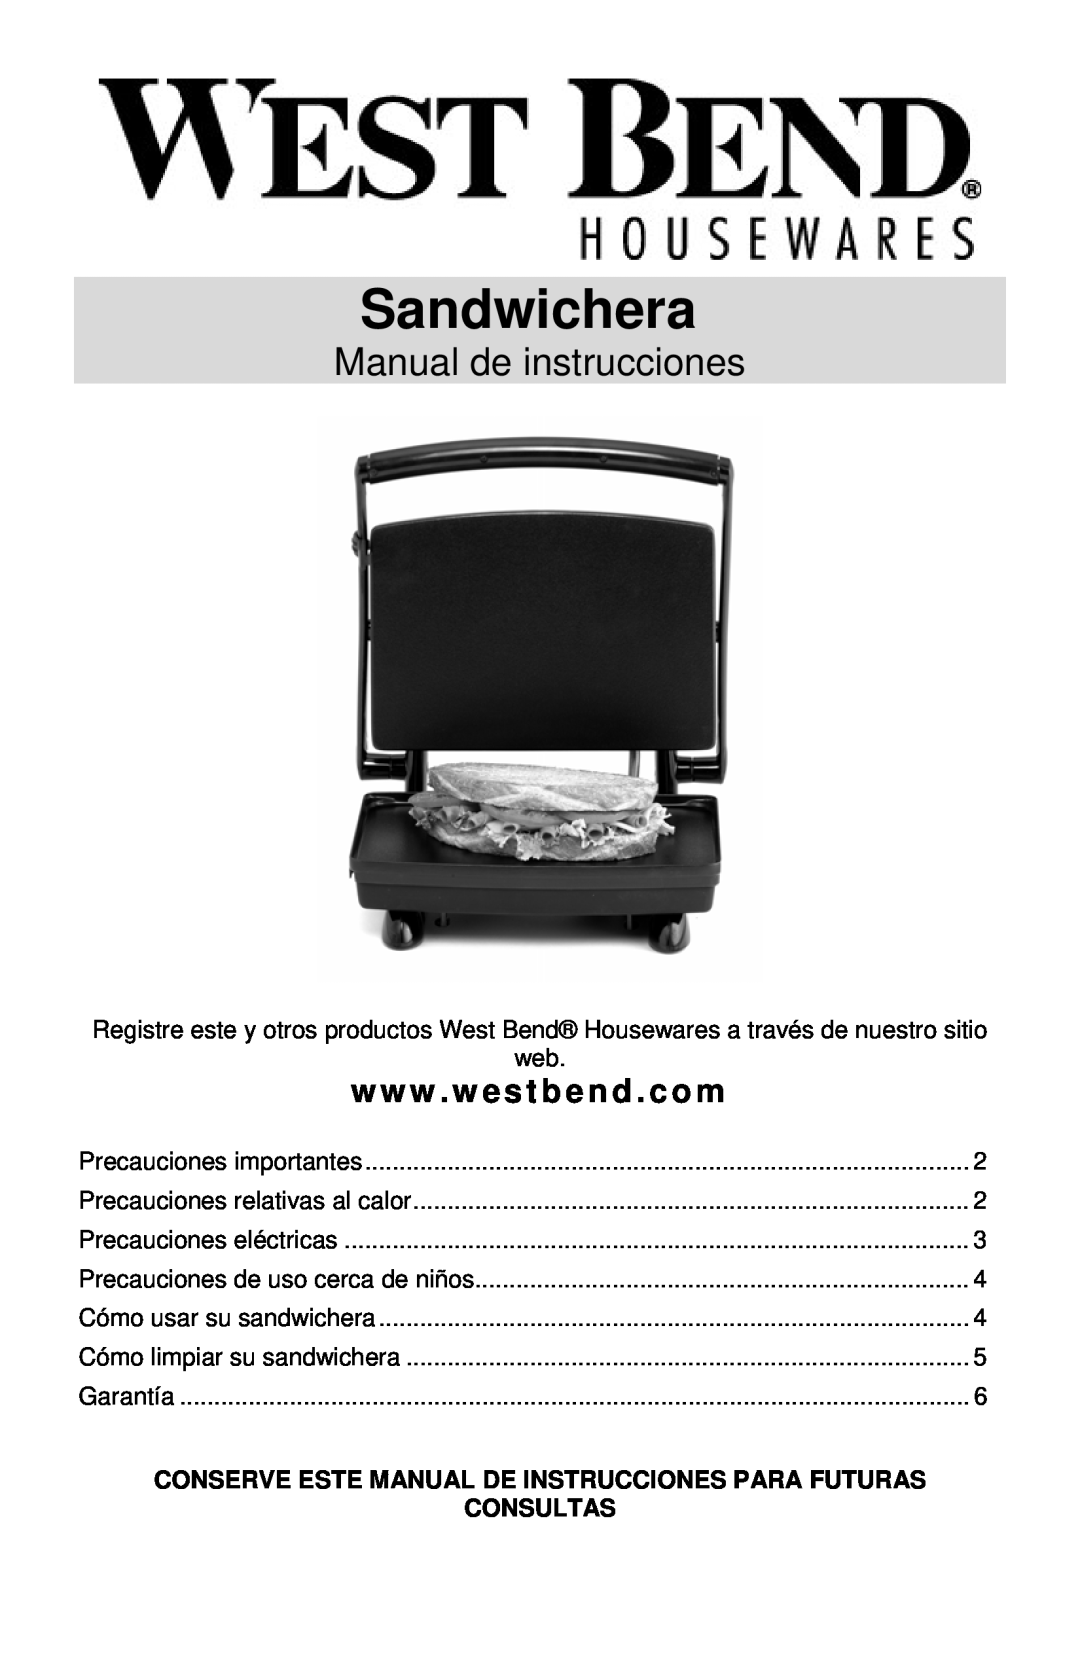 West Bend Sandwich Maker instruction manual Sandwichera, Manual de instrucciones, Consultas, w w w . w estbend . com 